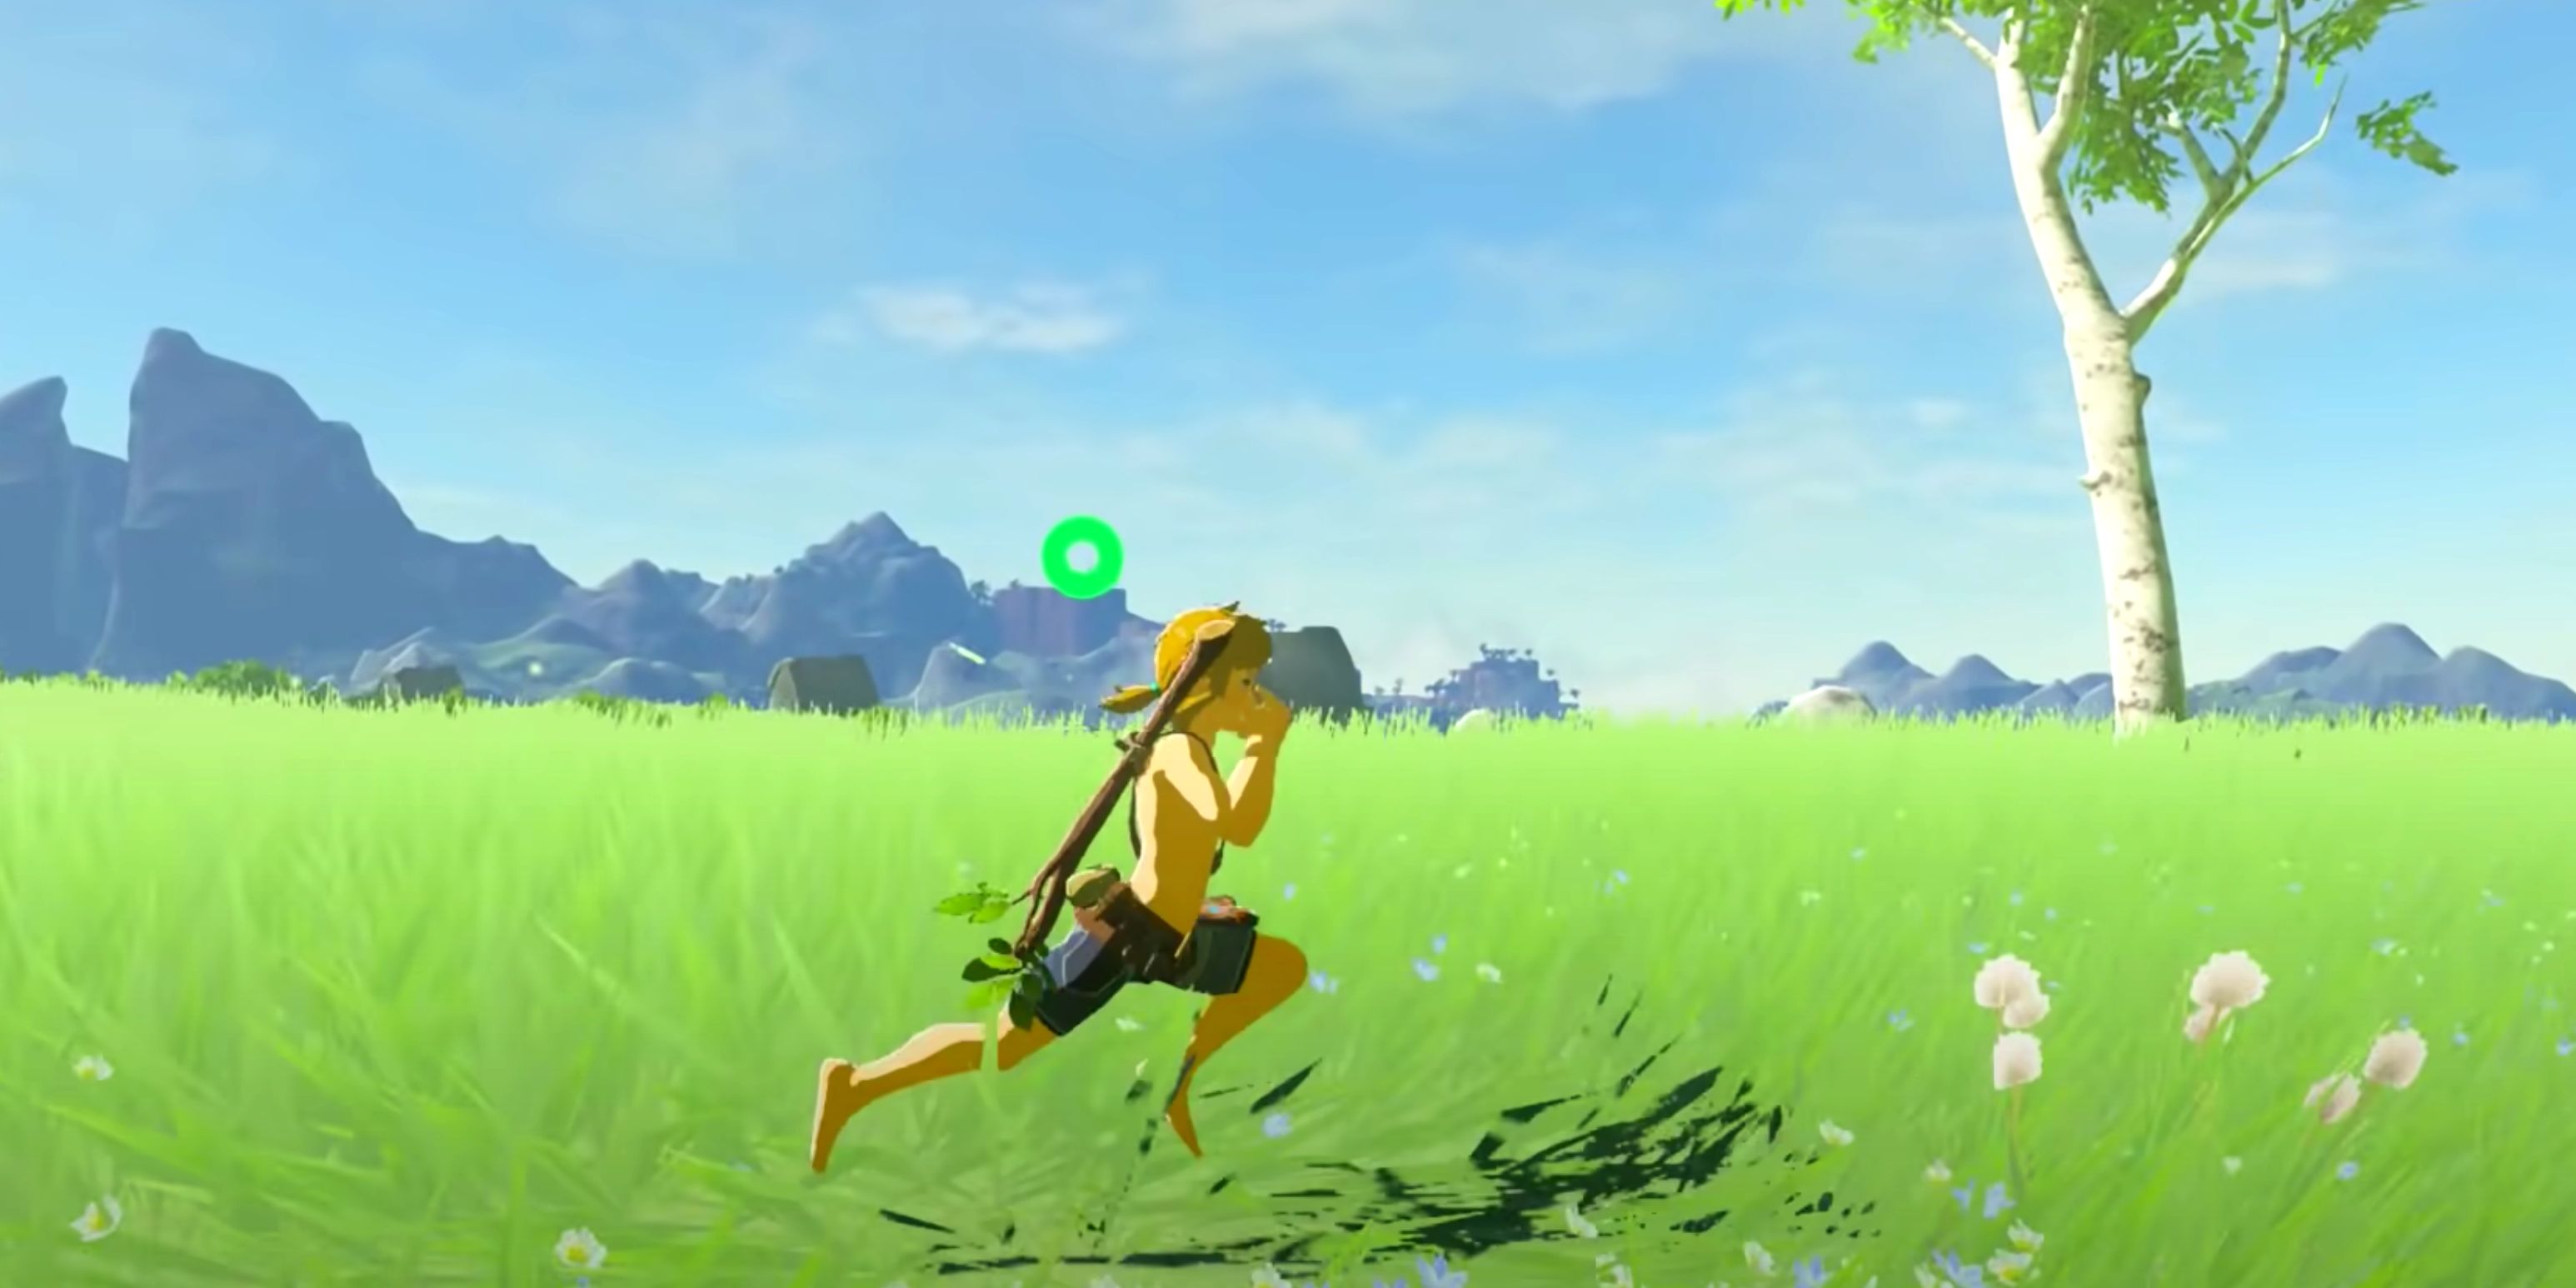 Zelda BOTW - Link using whistle sprinting